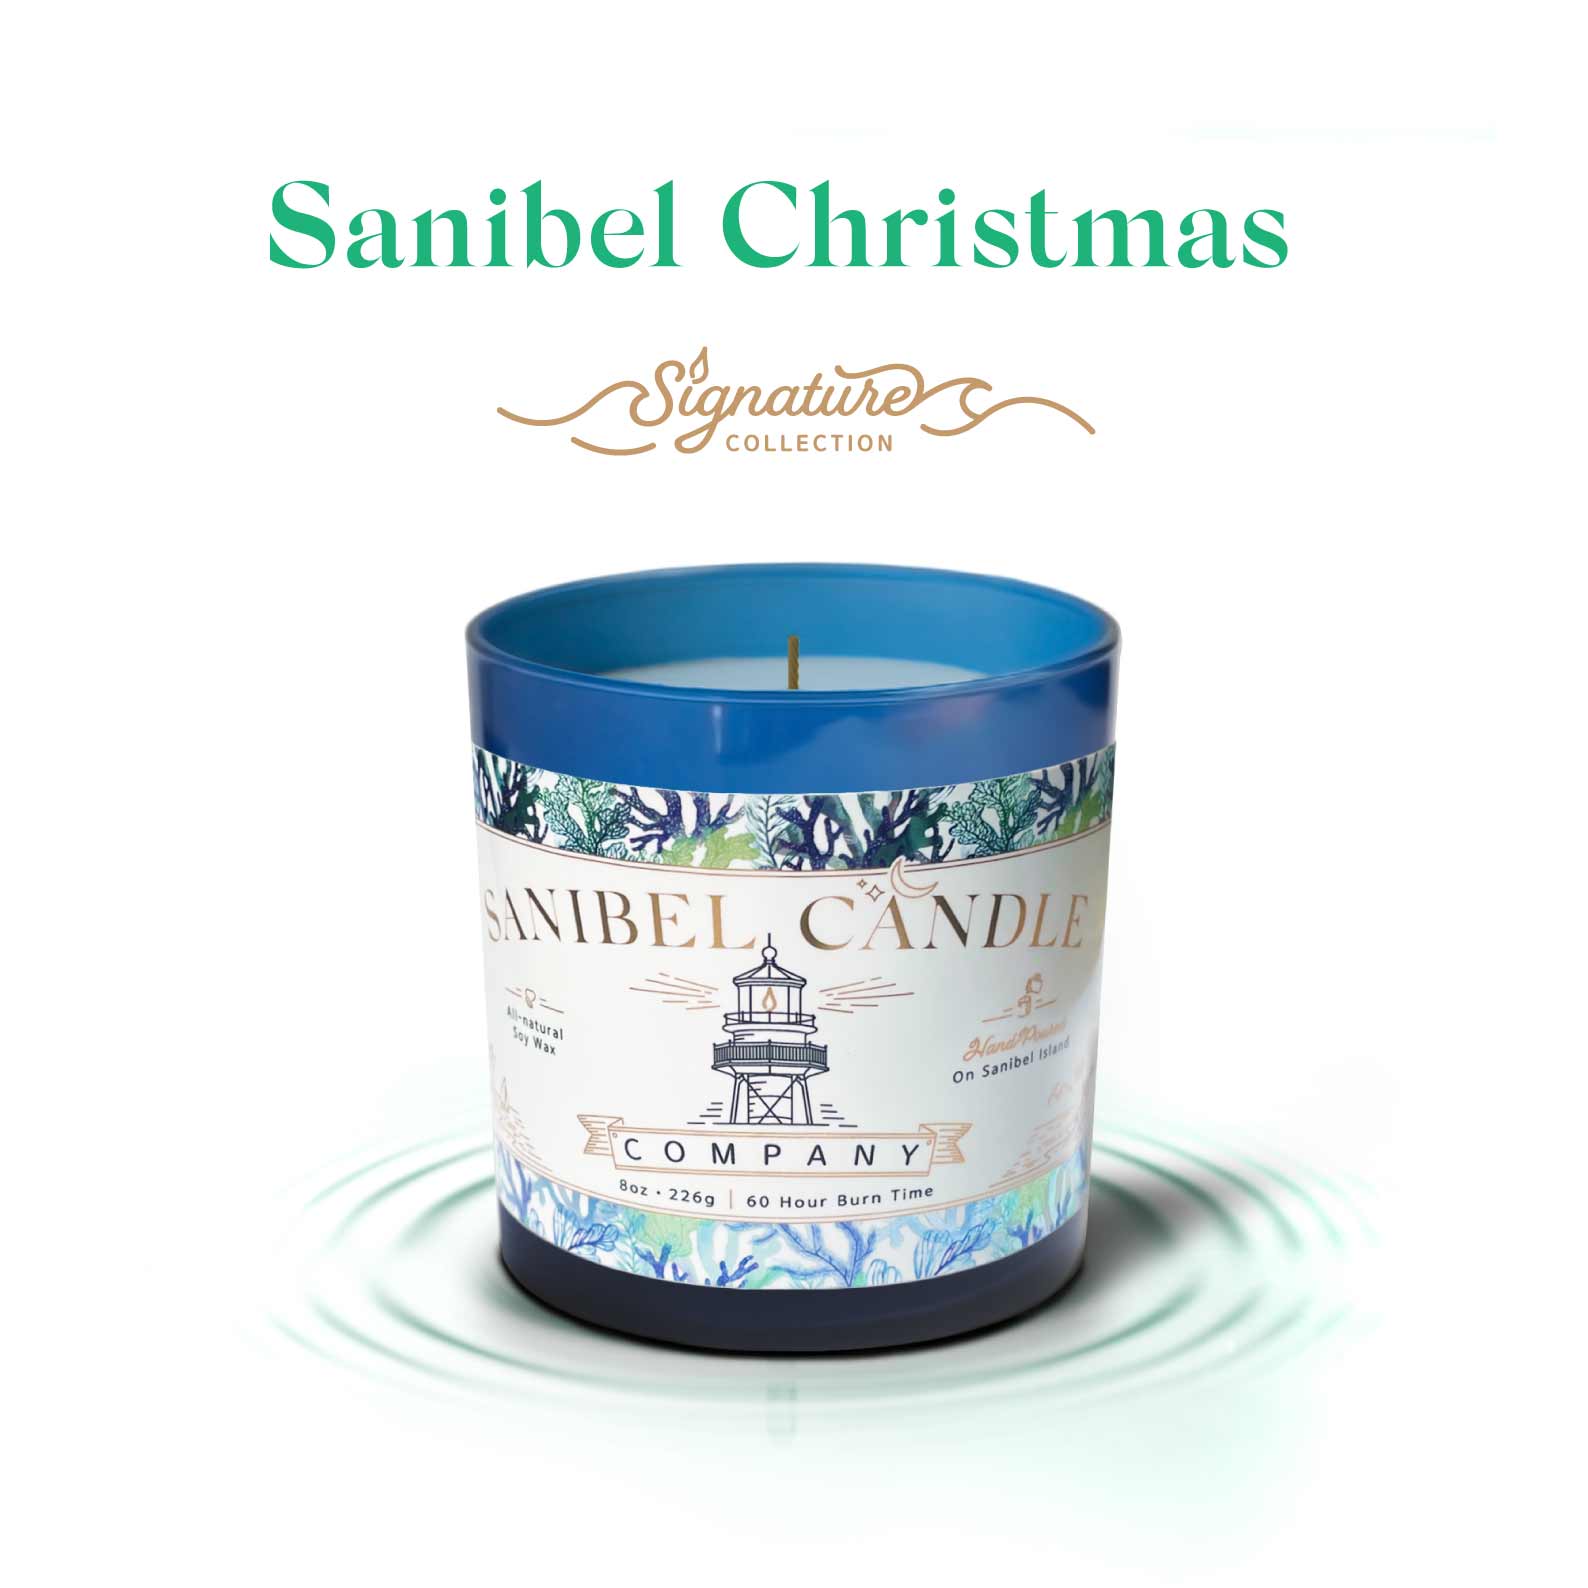 Sanibel Candle Company - Wax Melts - Signature & Christmas Scents Sanibel Christmas